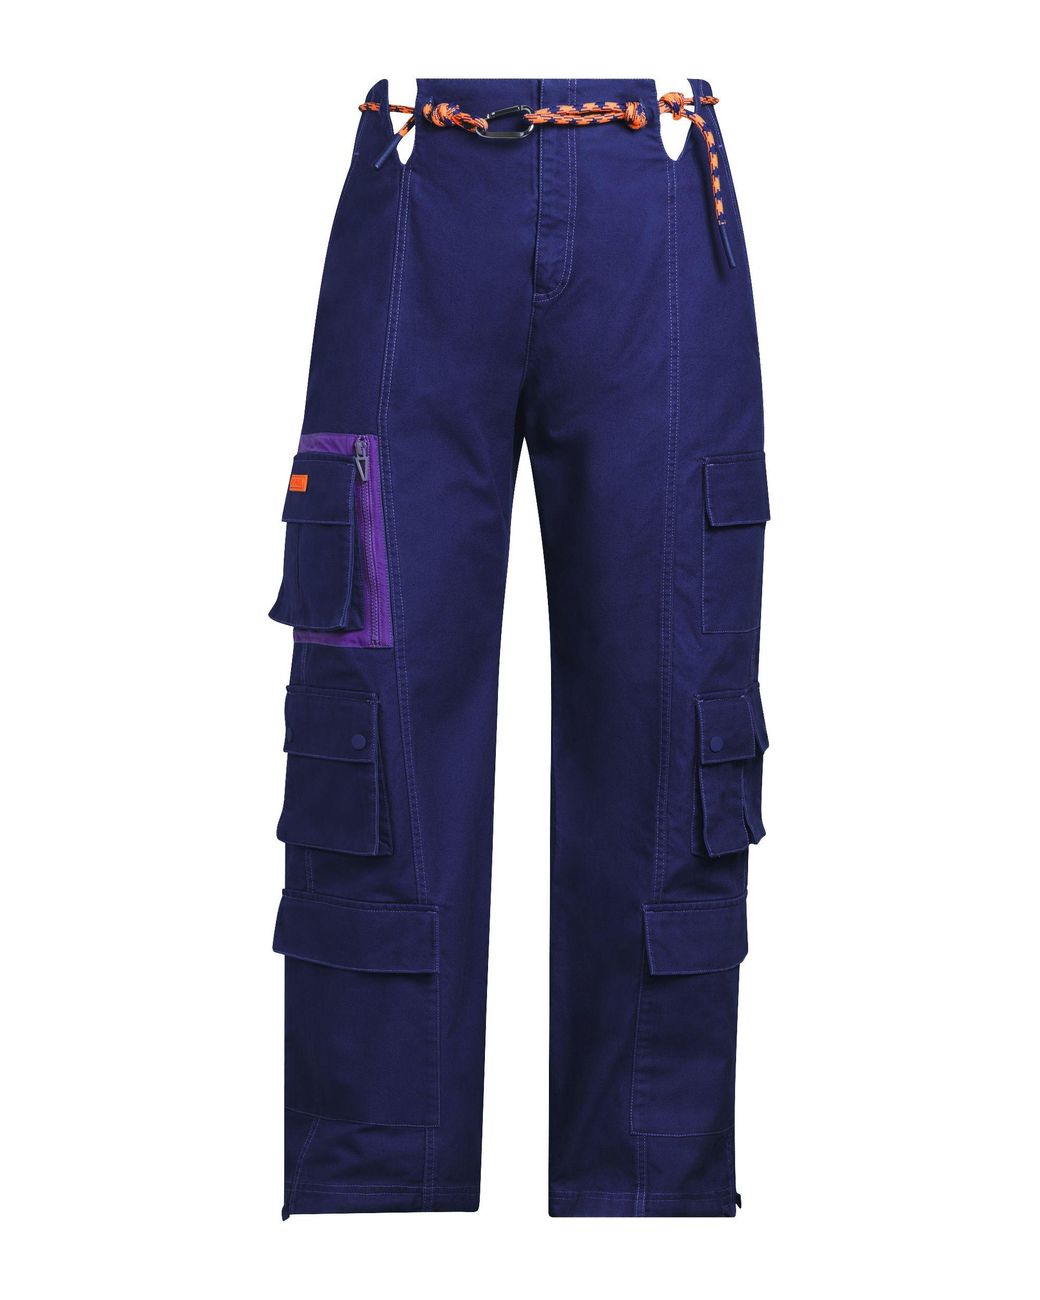 Ivy Park Adidas Originals X Plus Twill Cargo Pants in Blue | Lyst